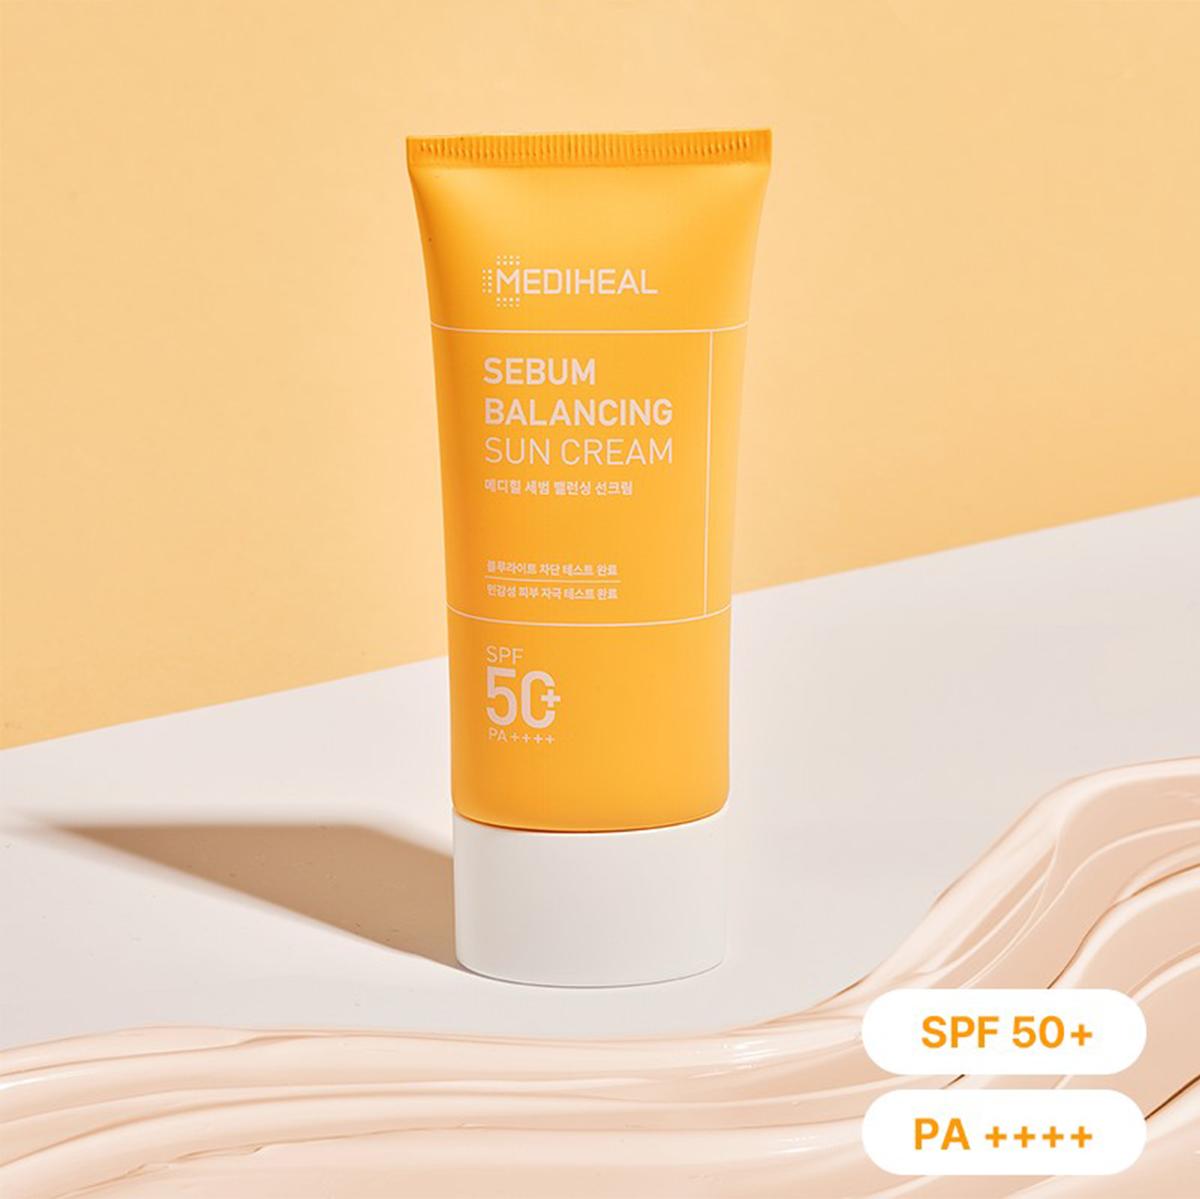 Sebum Balancing Sun Cream